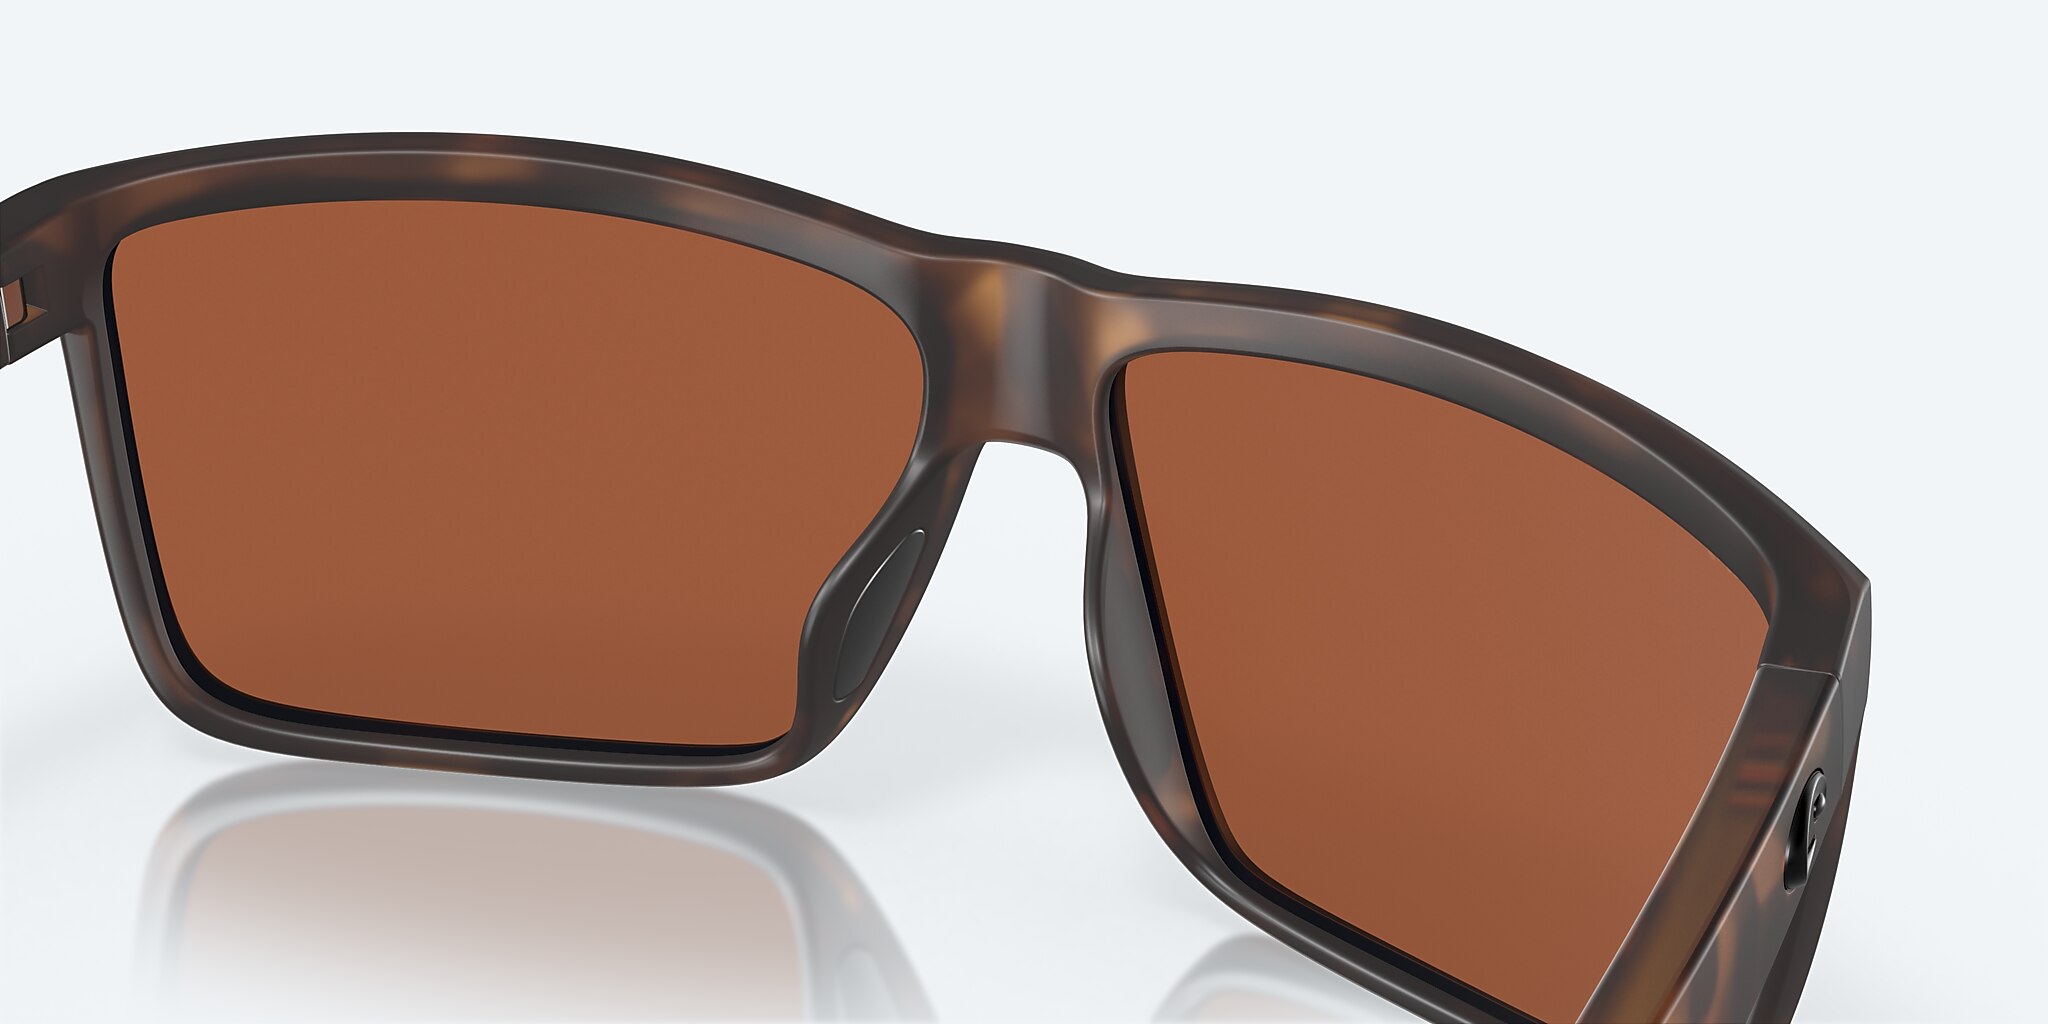  Sea Striker Bill Collector Polarized Sunglasses, Tortoise  Frame, Green Mirror Lens : Sports & Outdoors